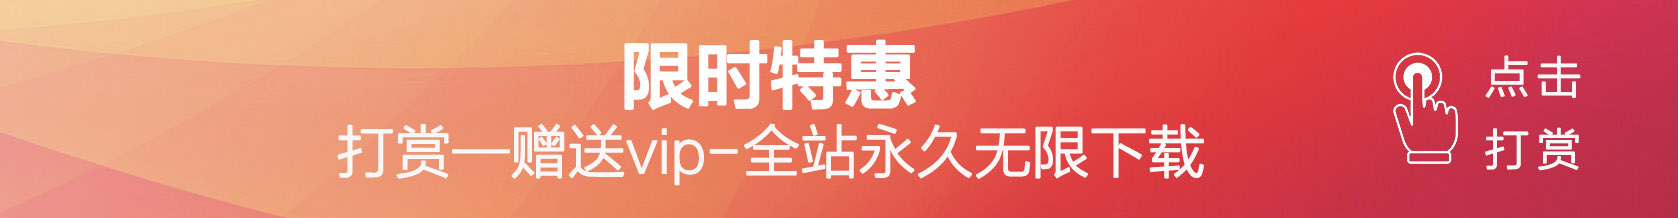 ApolloOne mac版照片视频浏览器v3.0.2中文破解版下载